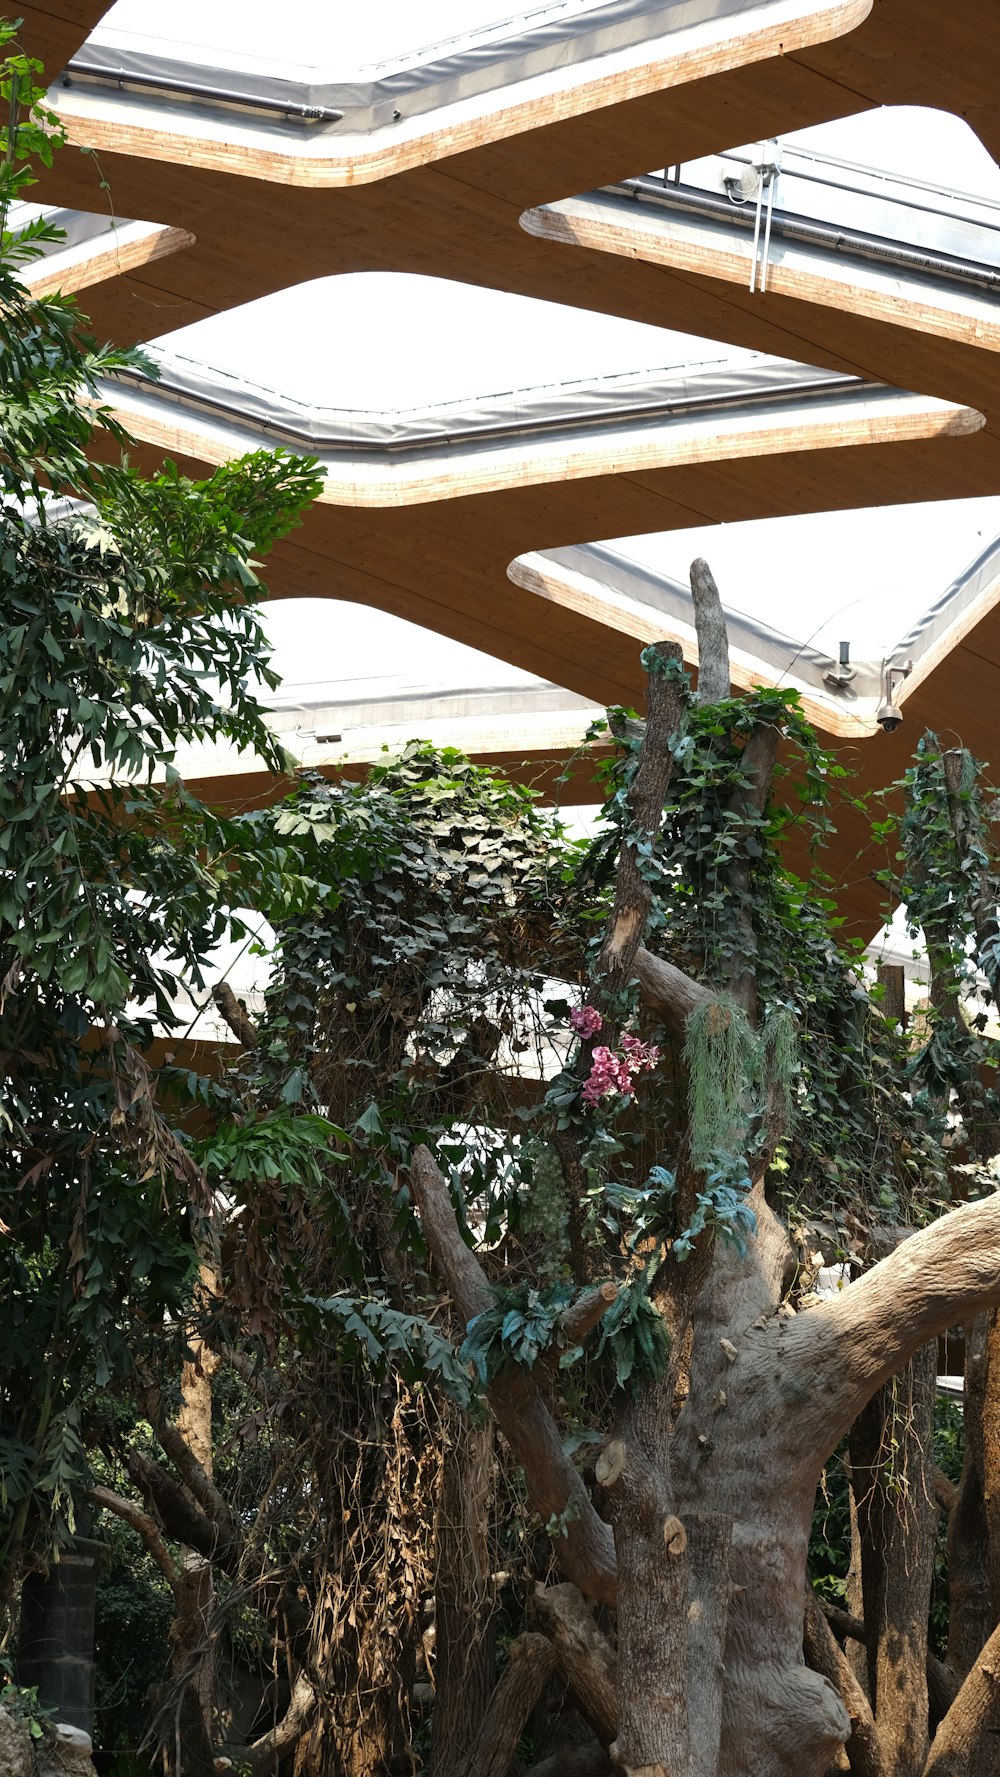 a giraffe standing next to a tree under a roof